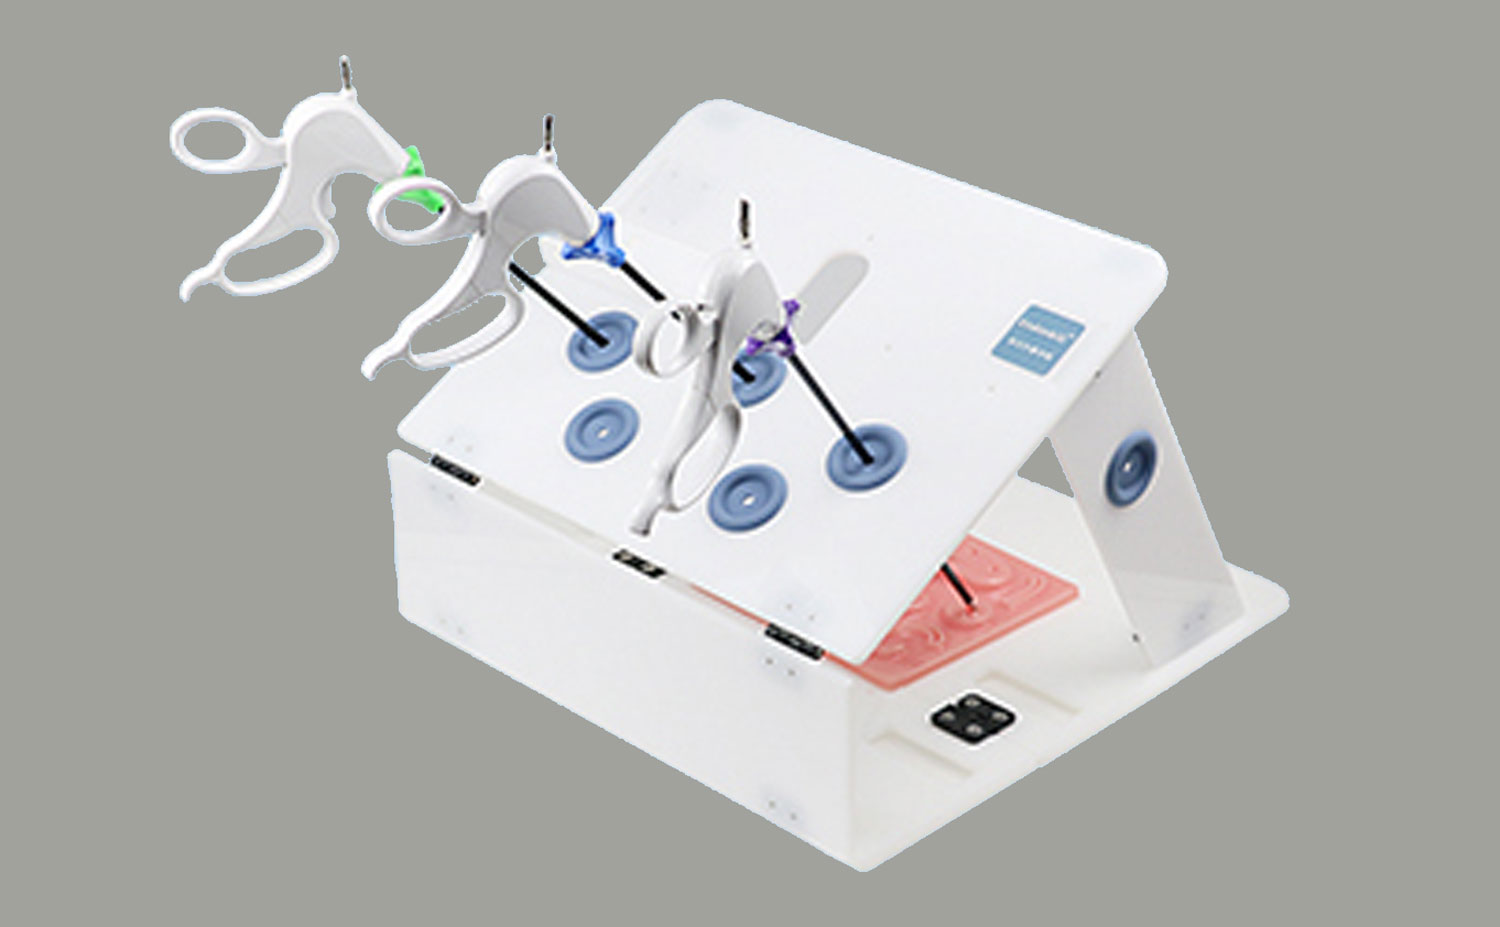 /laparoscopic-training-box-product/